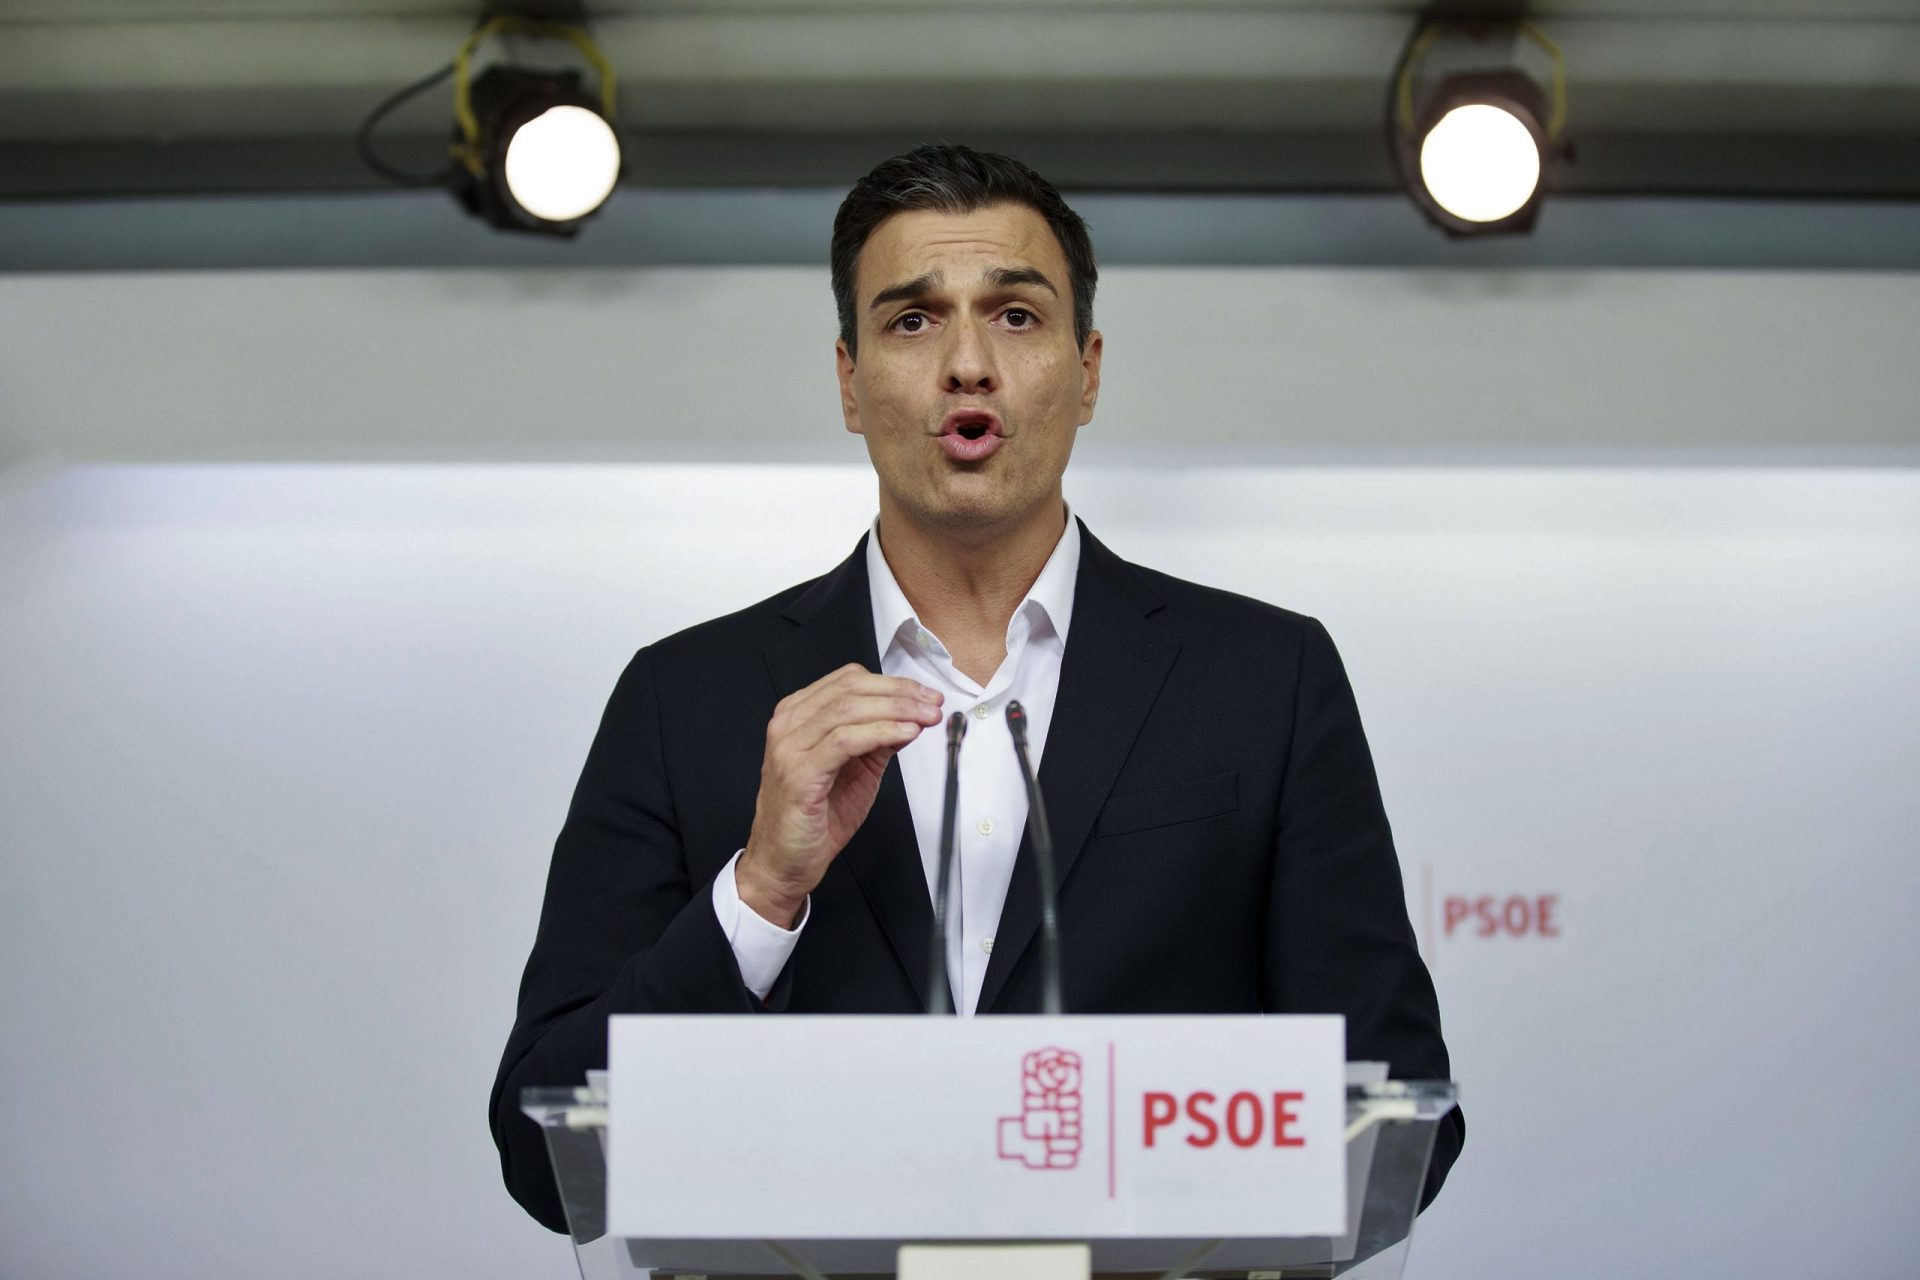 Catalunha. Podemos pede a Sánchez para o PSOE não apoiar PP e permitir referendo